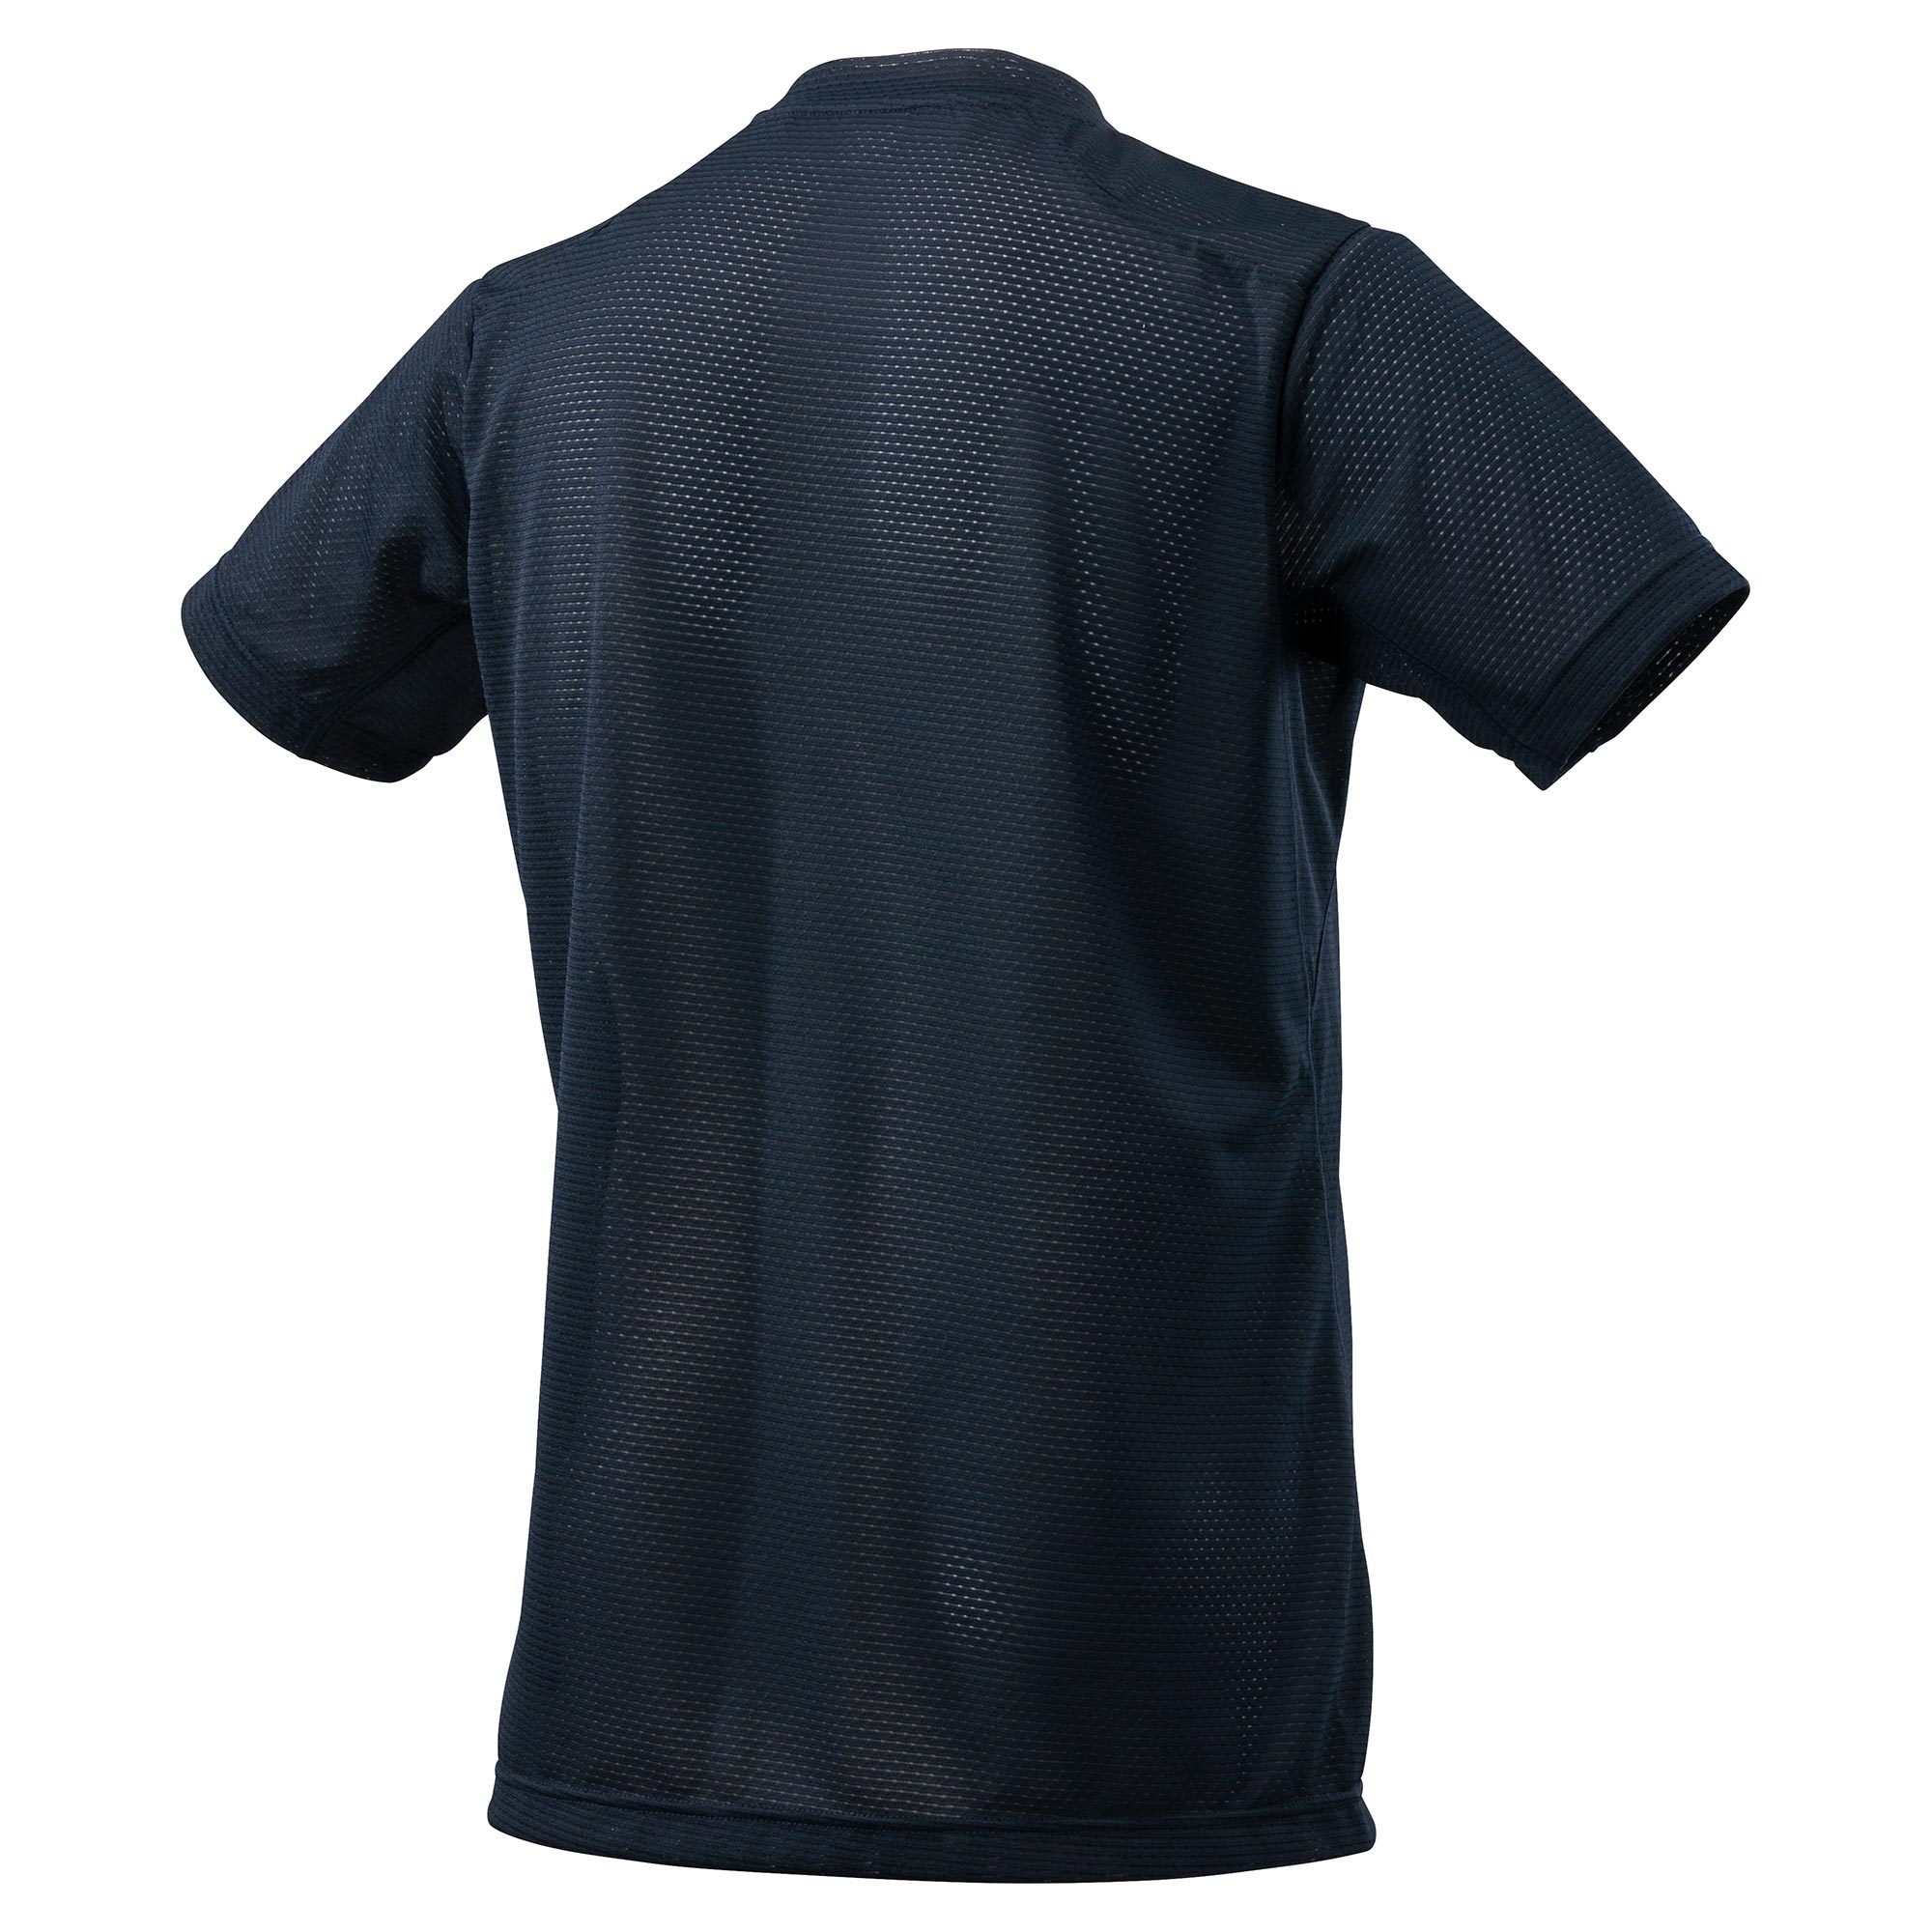 KUGEKIシャツ半袖[メンズ]|F2JA0180|ウエア|ワーキング用品|ミズノ公式オンライン